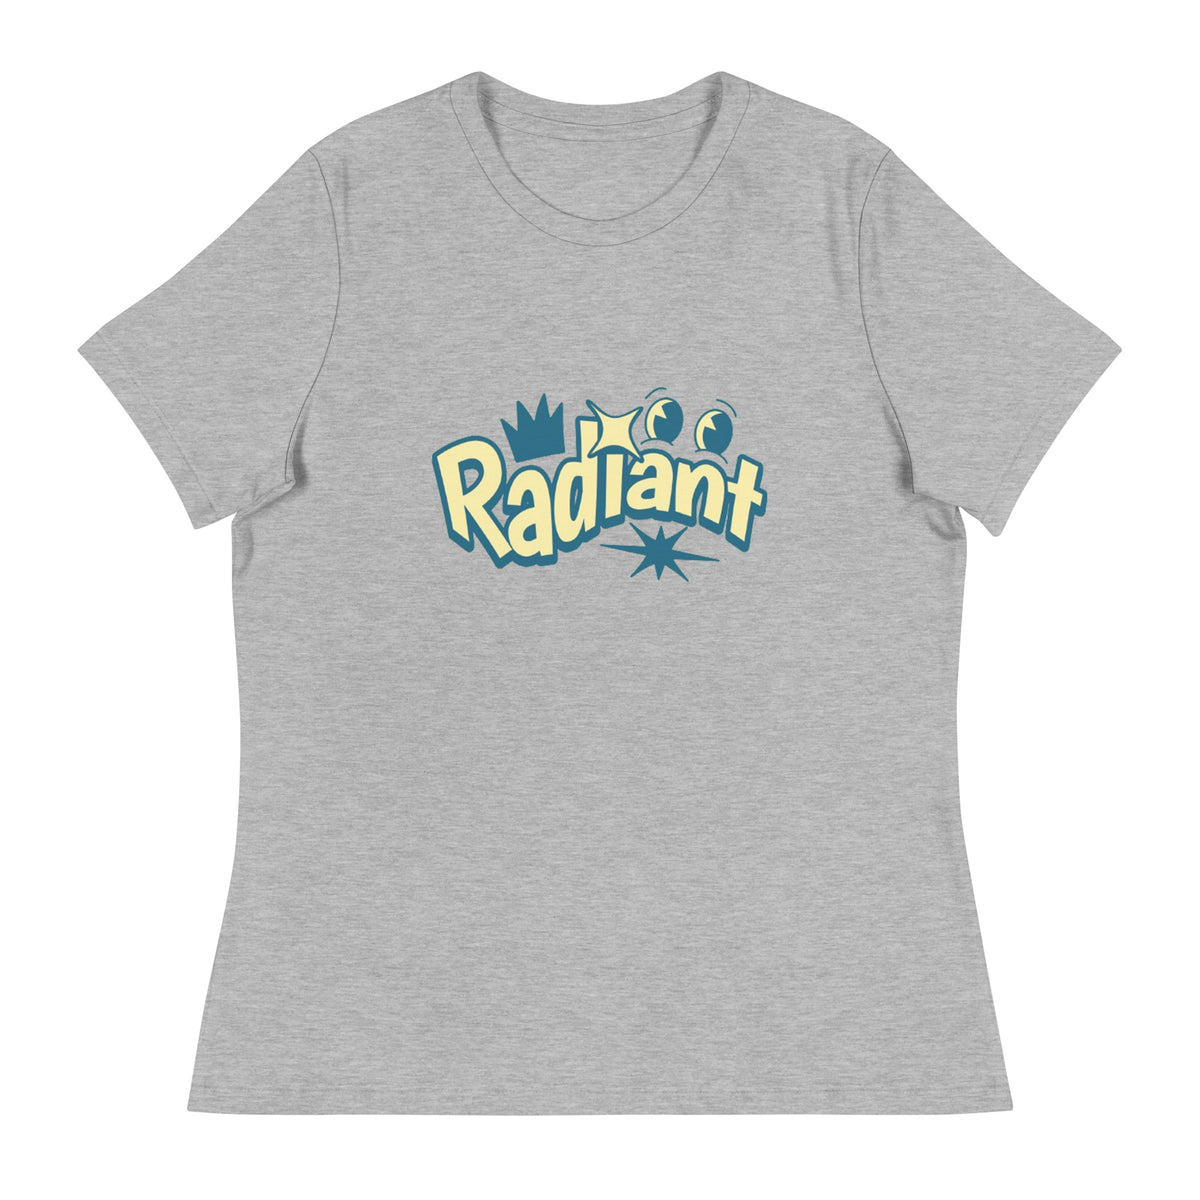 Radiant T-Shirts